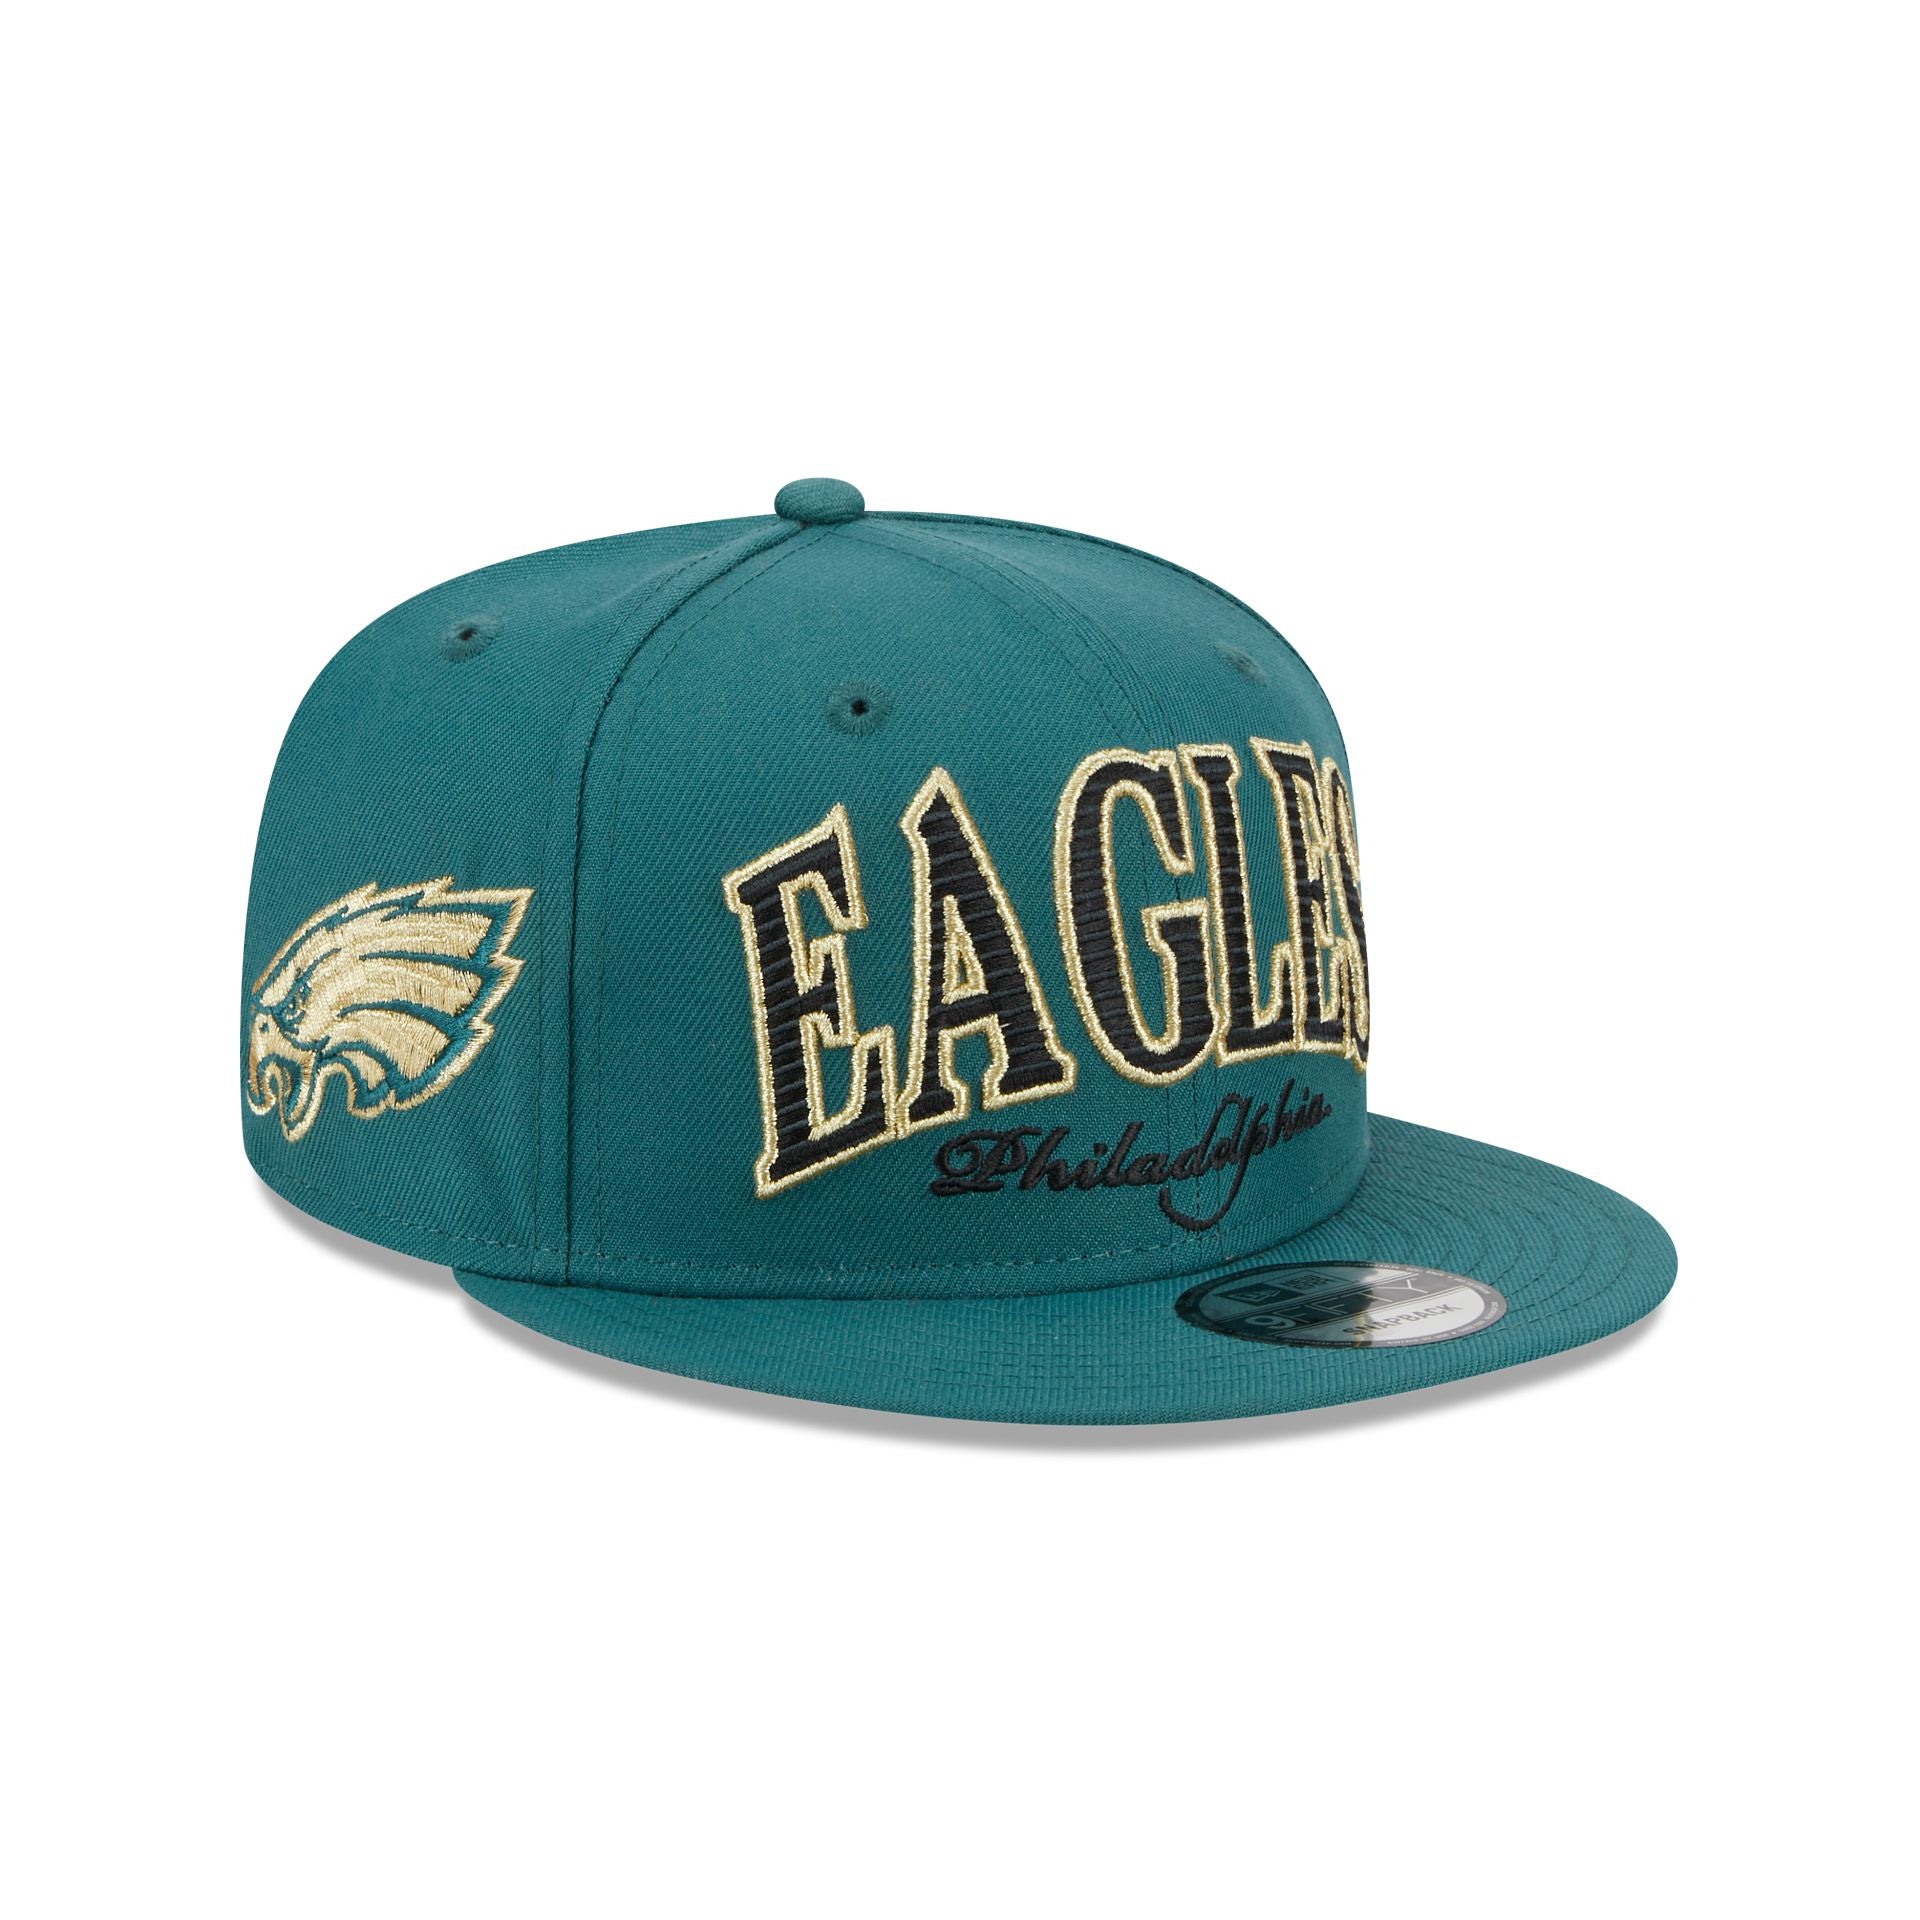 Philadelphia Eagles vintage caps